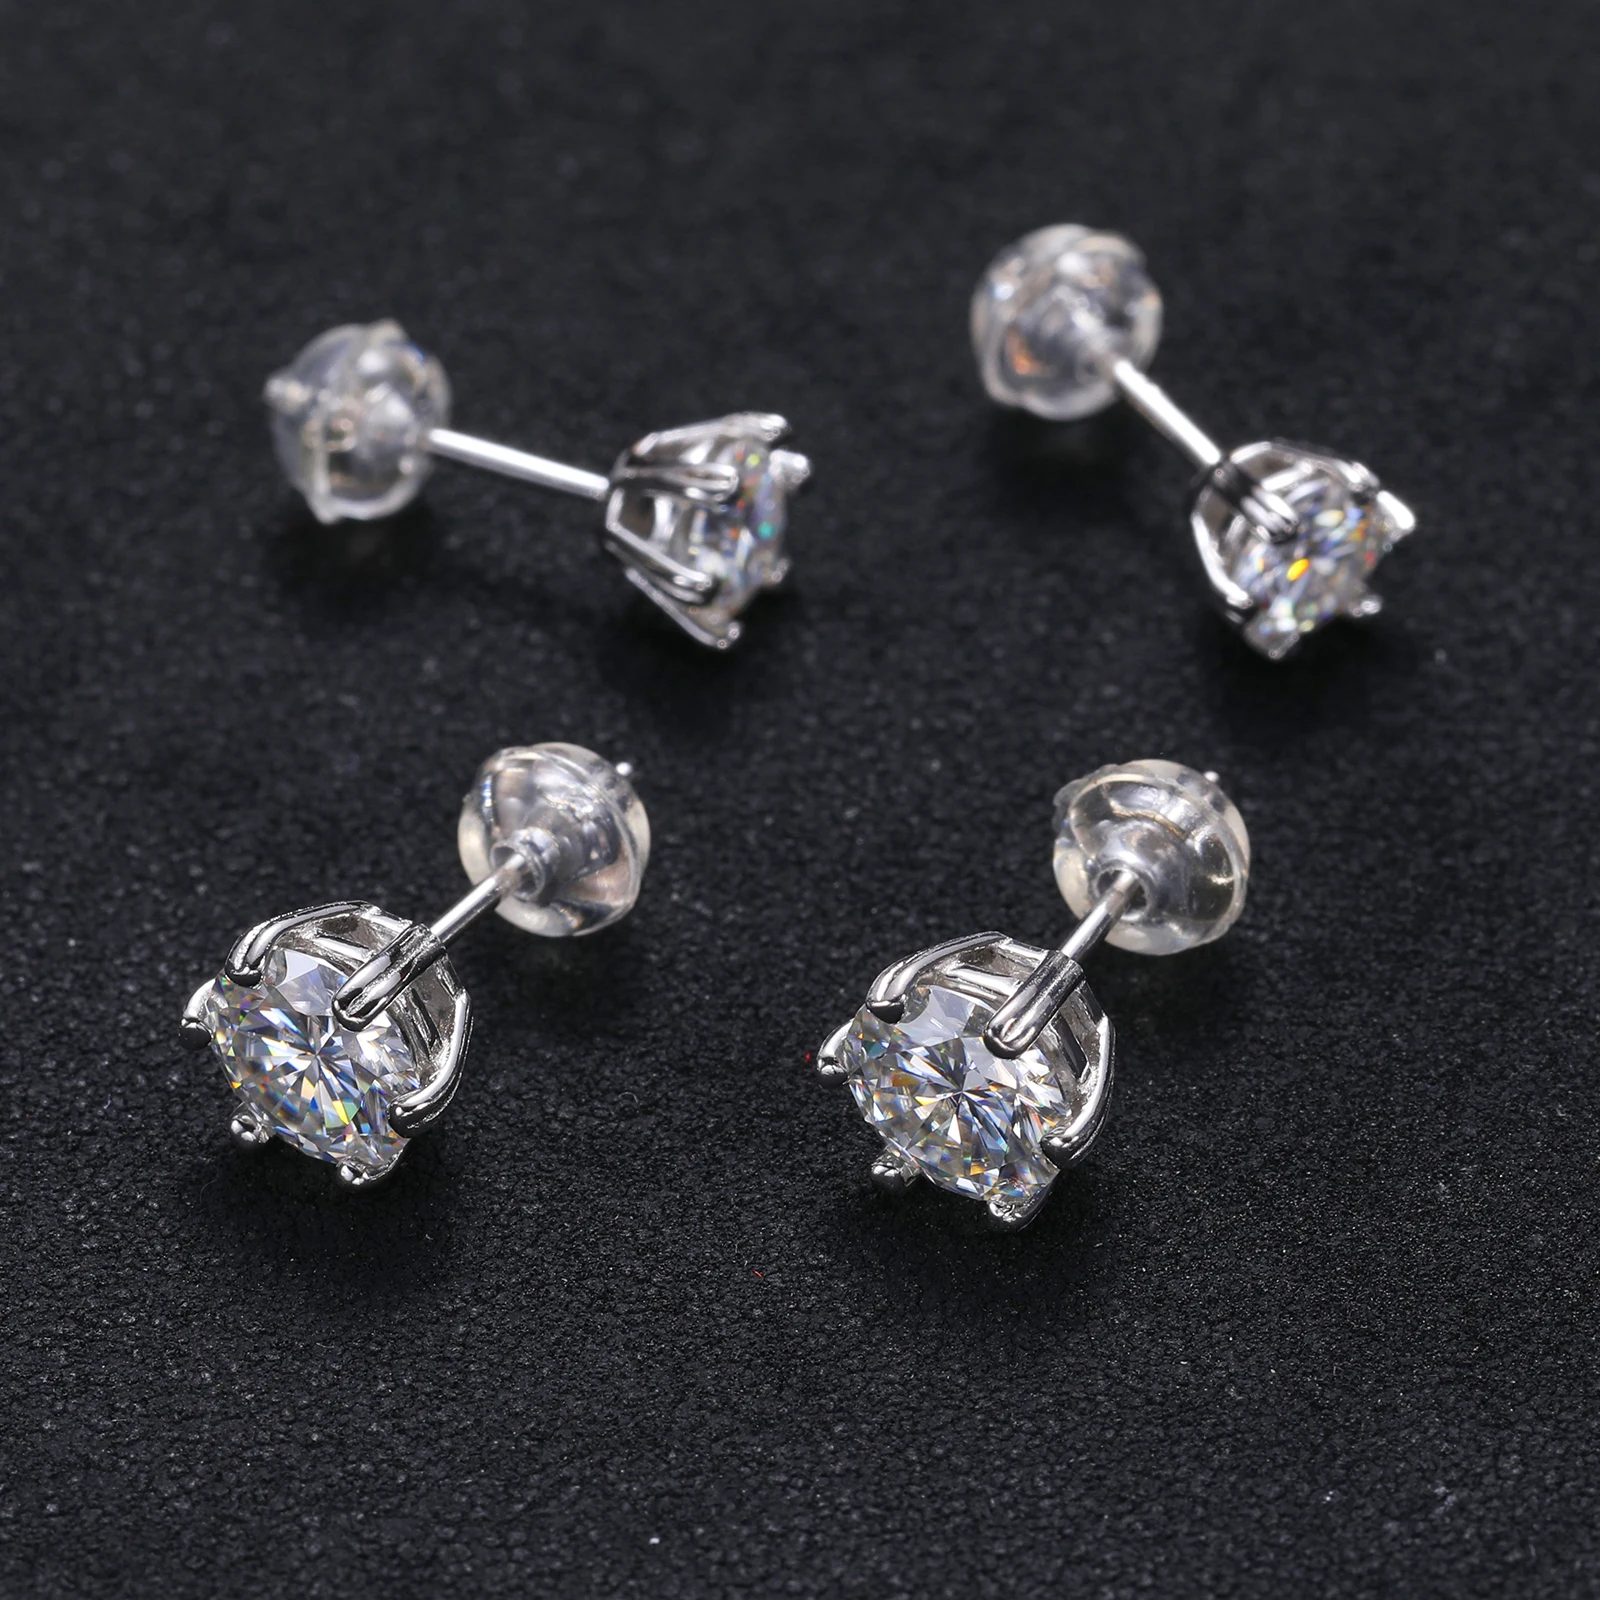 Pass Diamond Tester Six Claw Moissanite Stud 925 Sterling Silver Fine Jewelry Earrings Valentines Day Gift Earrings Women